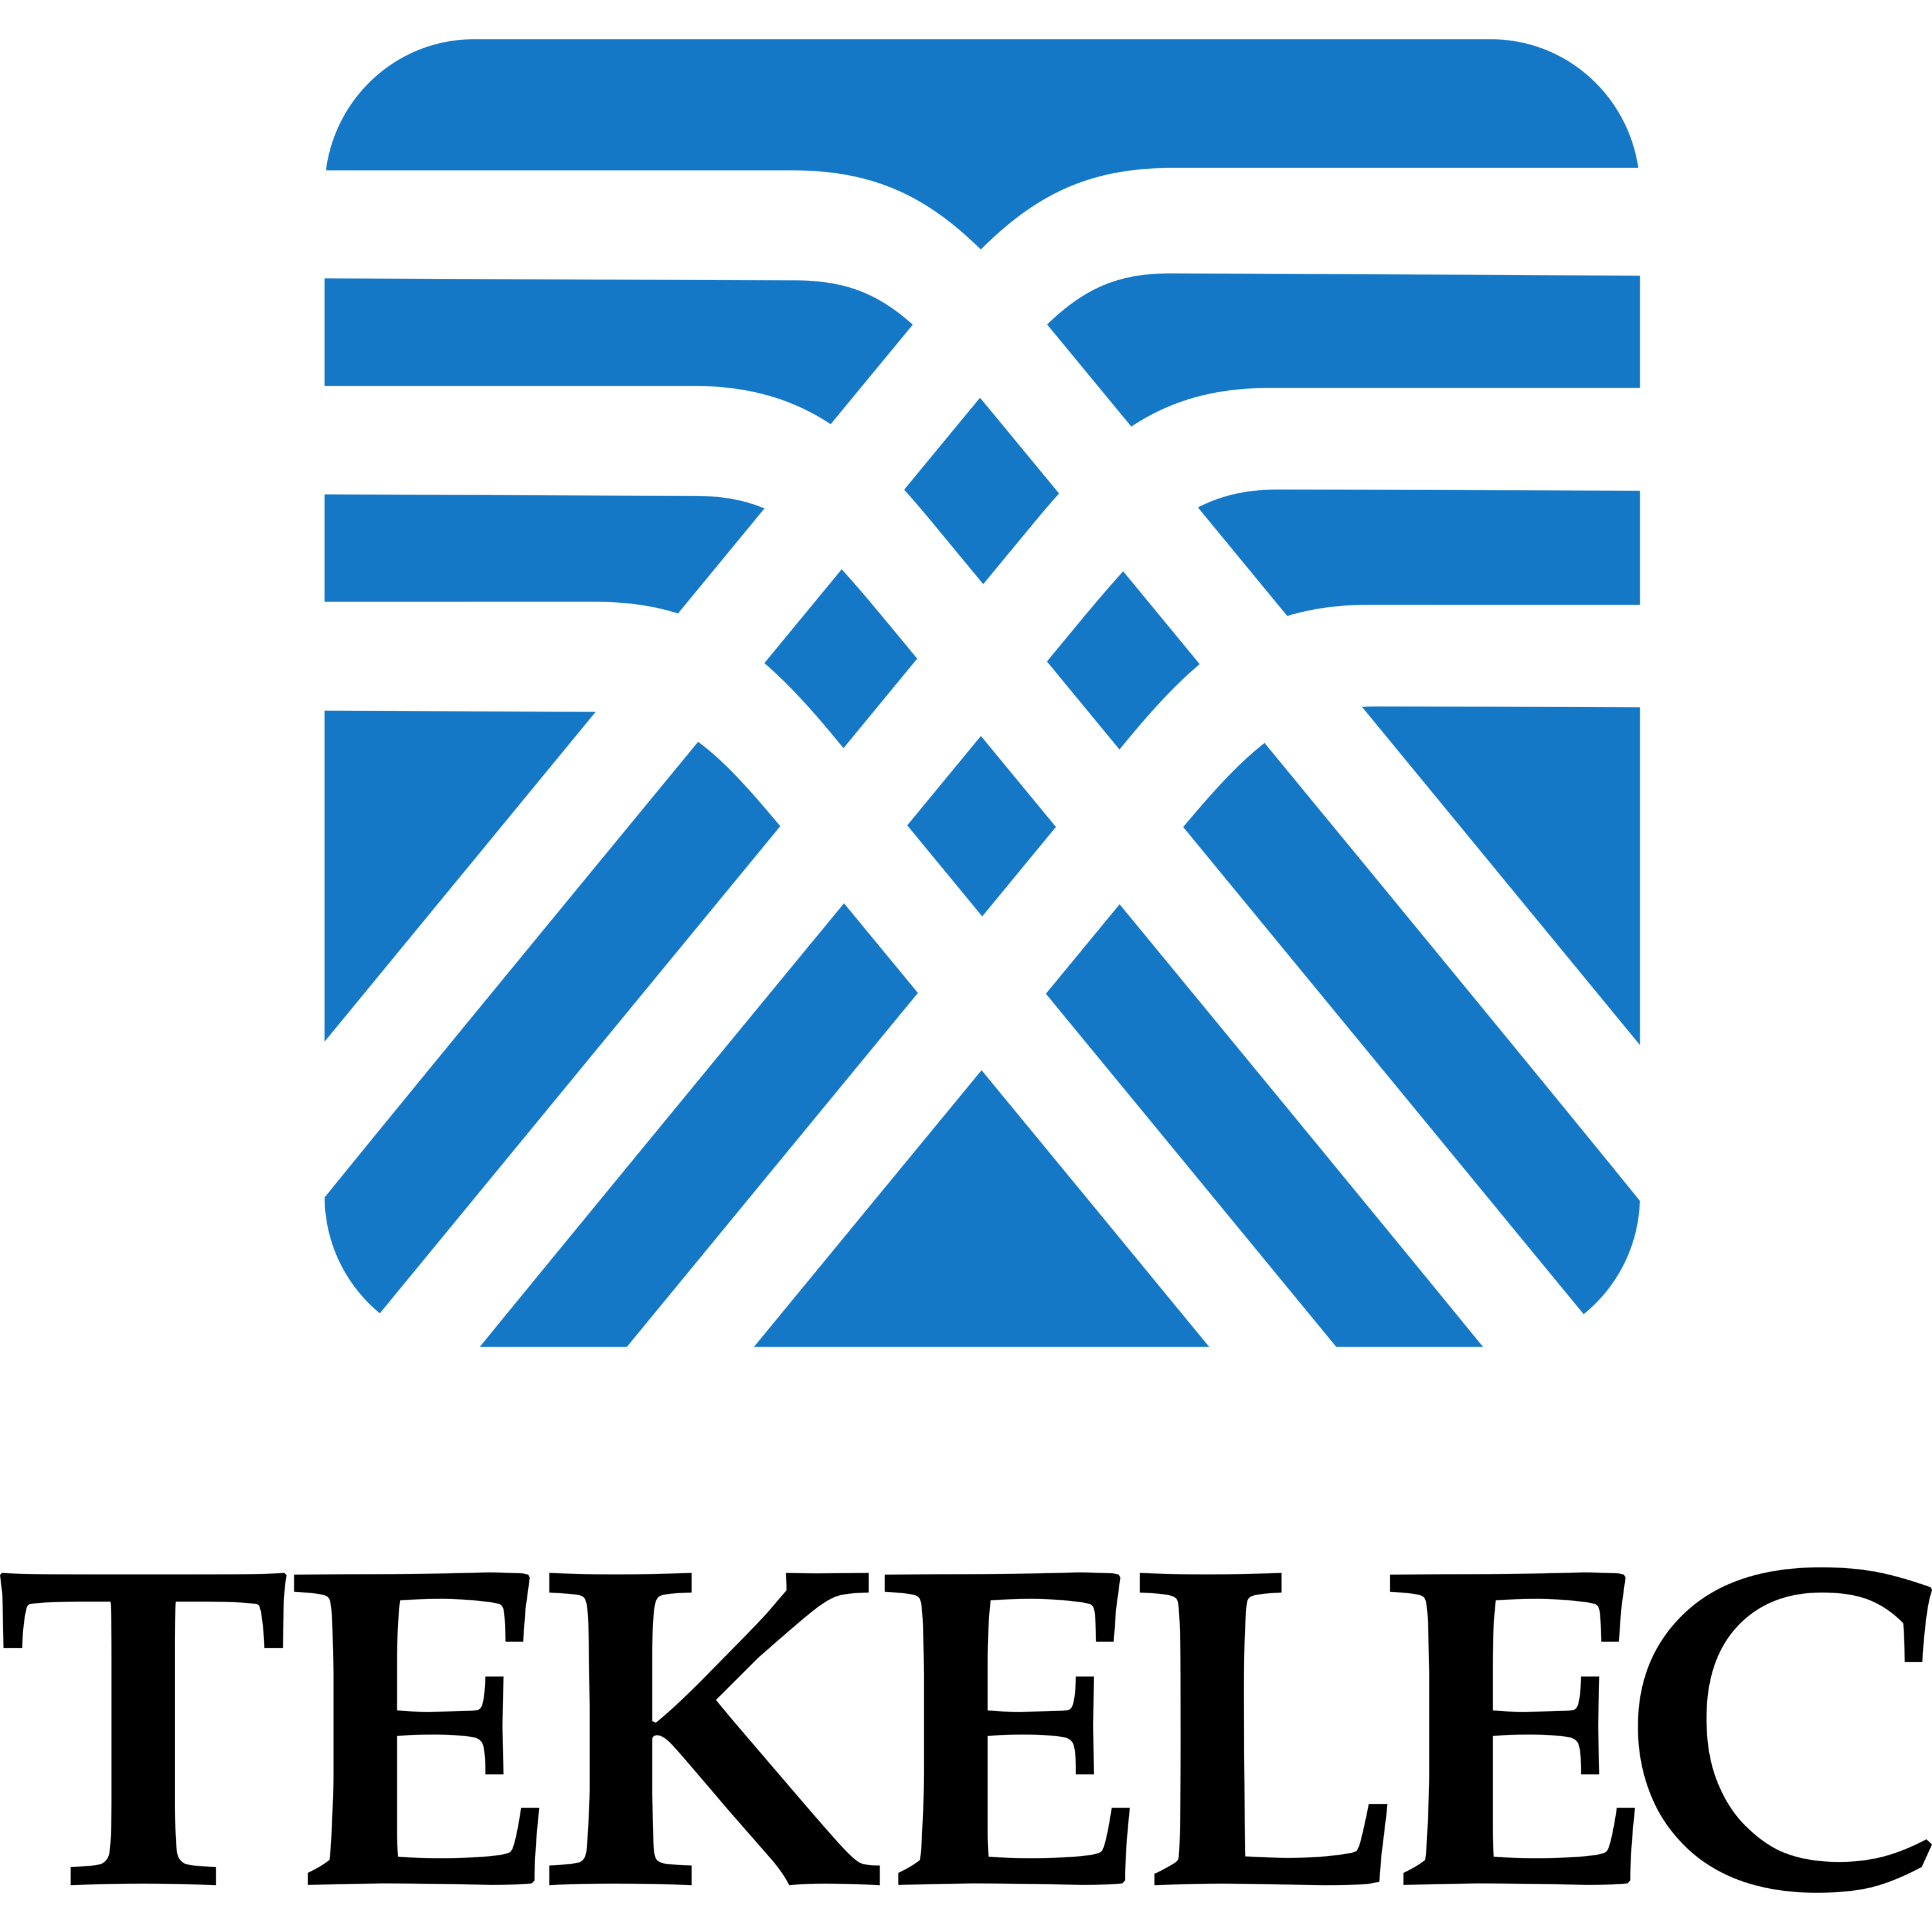 Tekelec Logo 2 Transparent Image